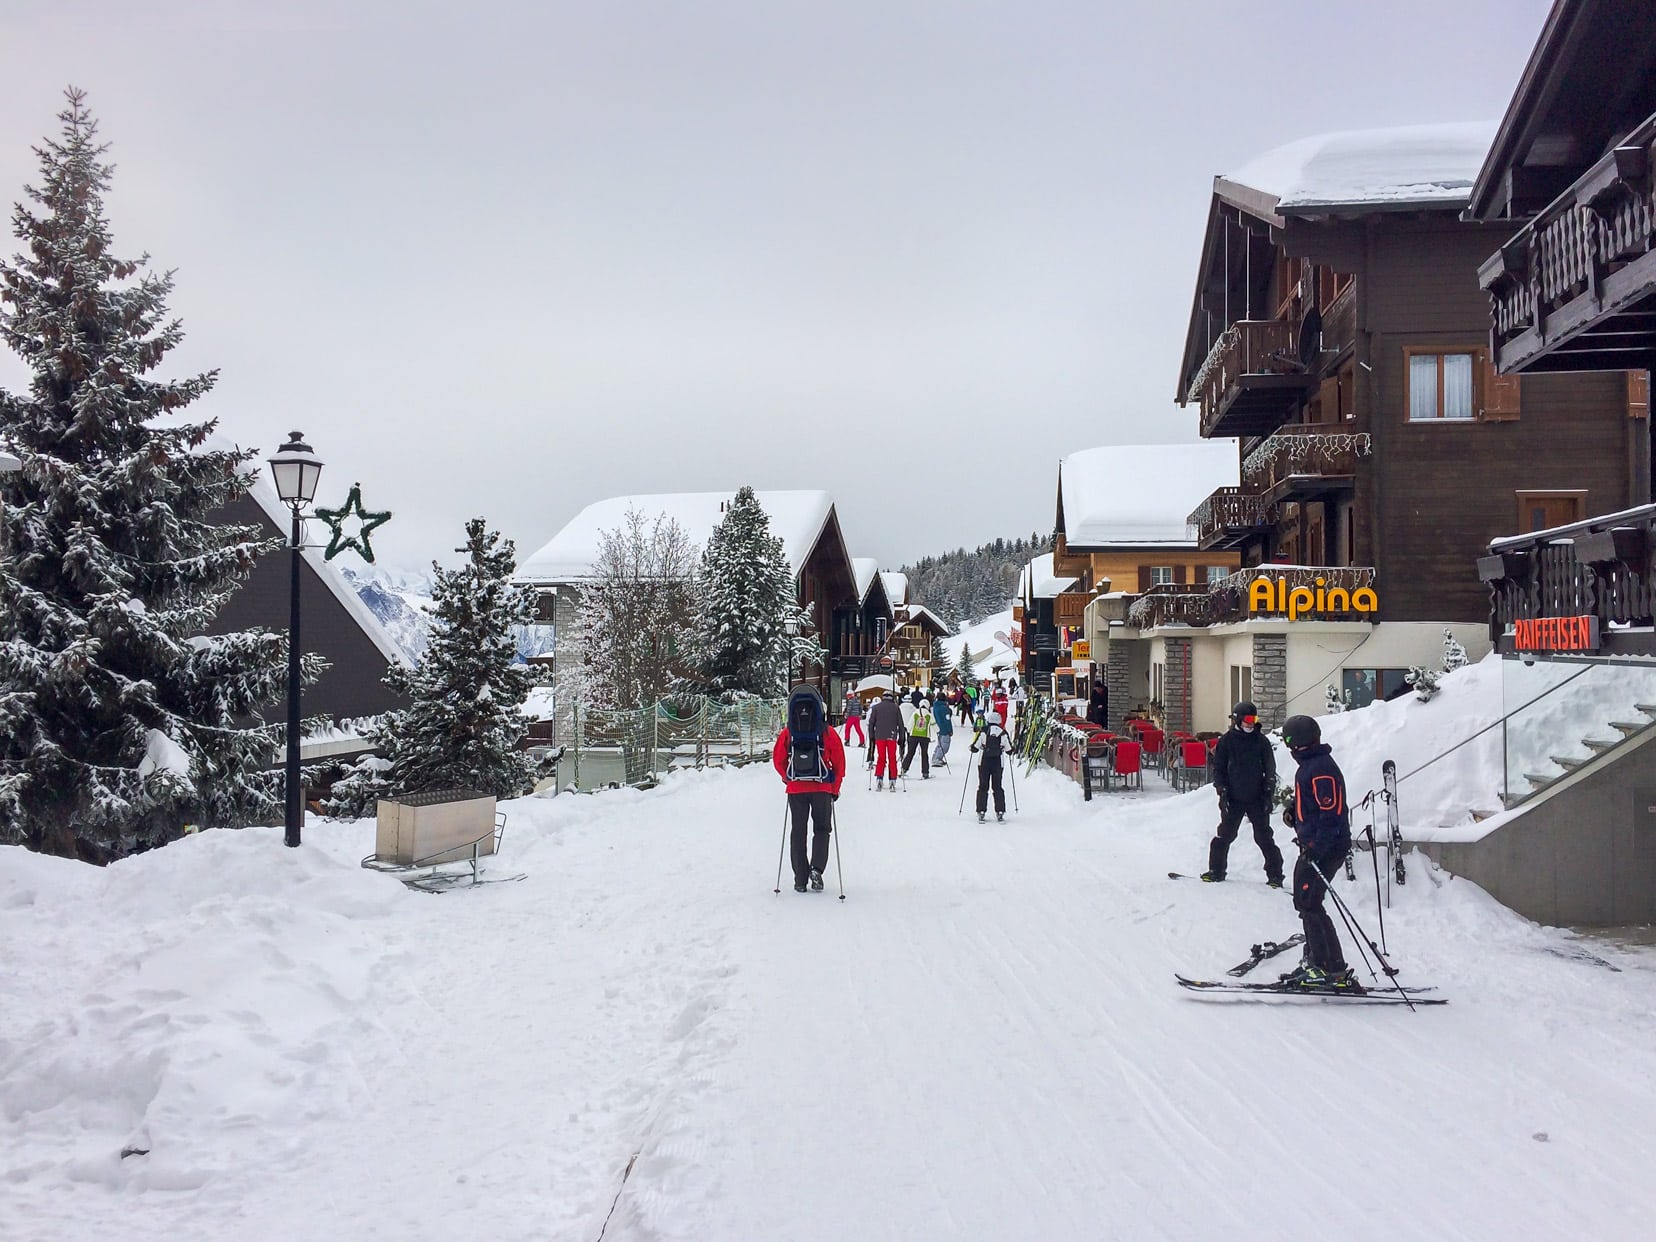 People skiing on the main road through Bettmeralp 